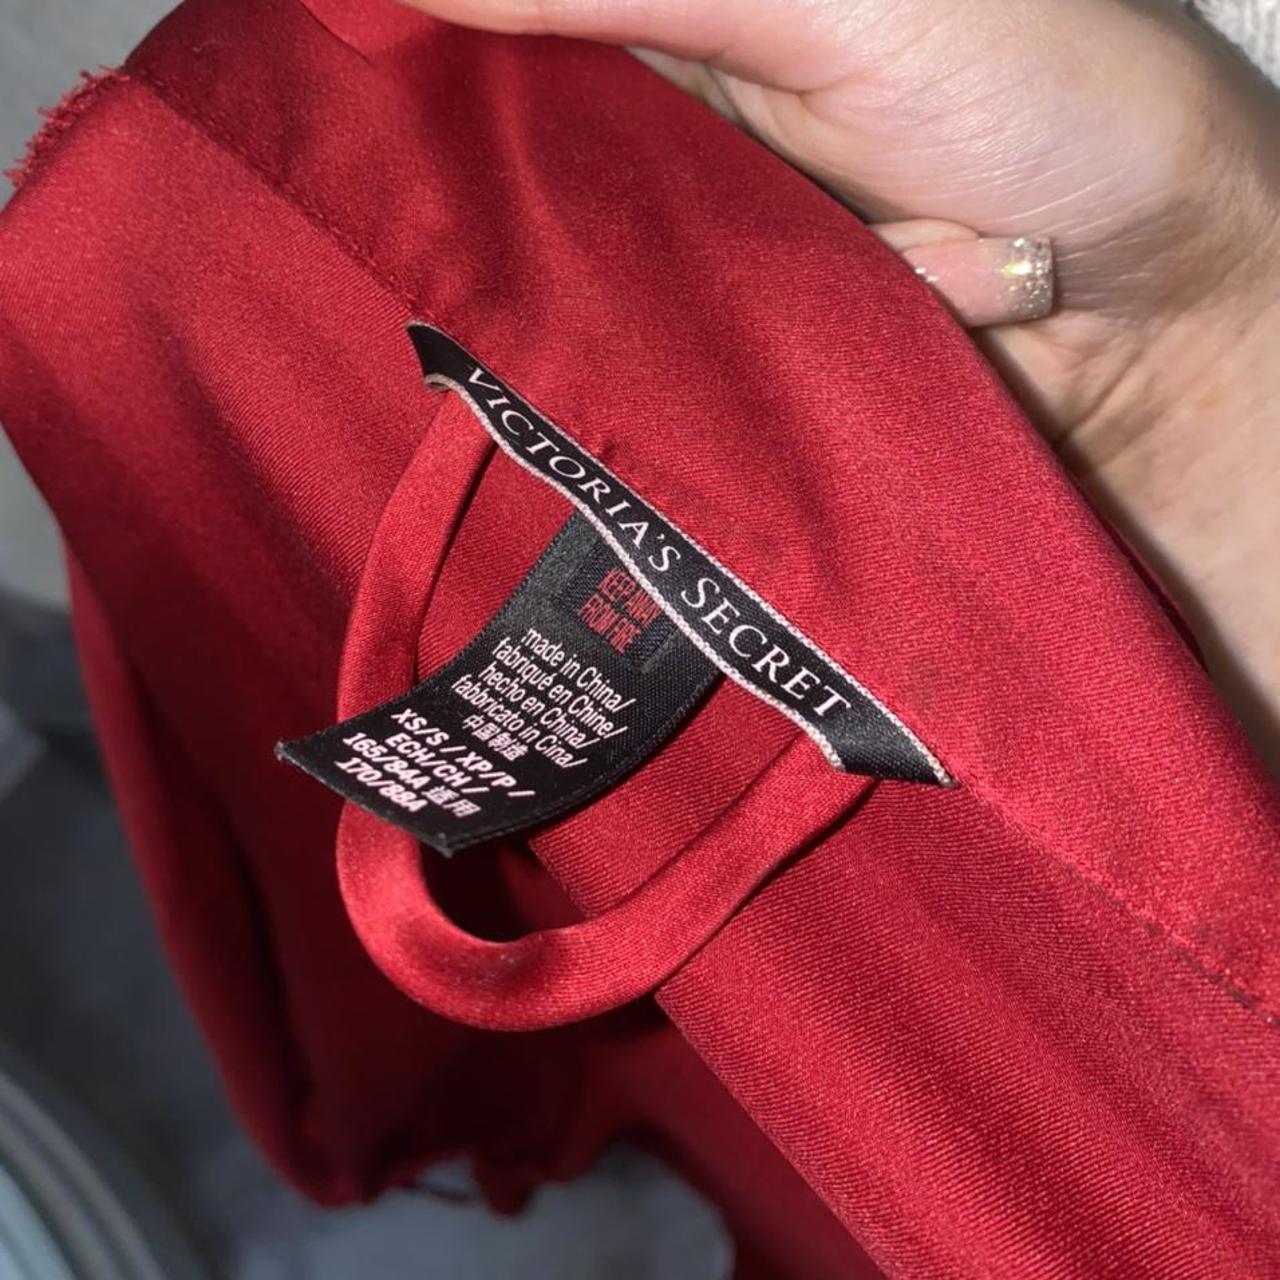 Product Image 2 - Victoria secret silk RED robe
Size